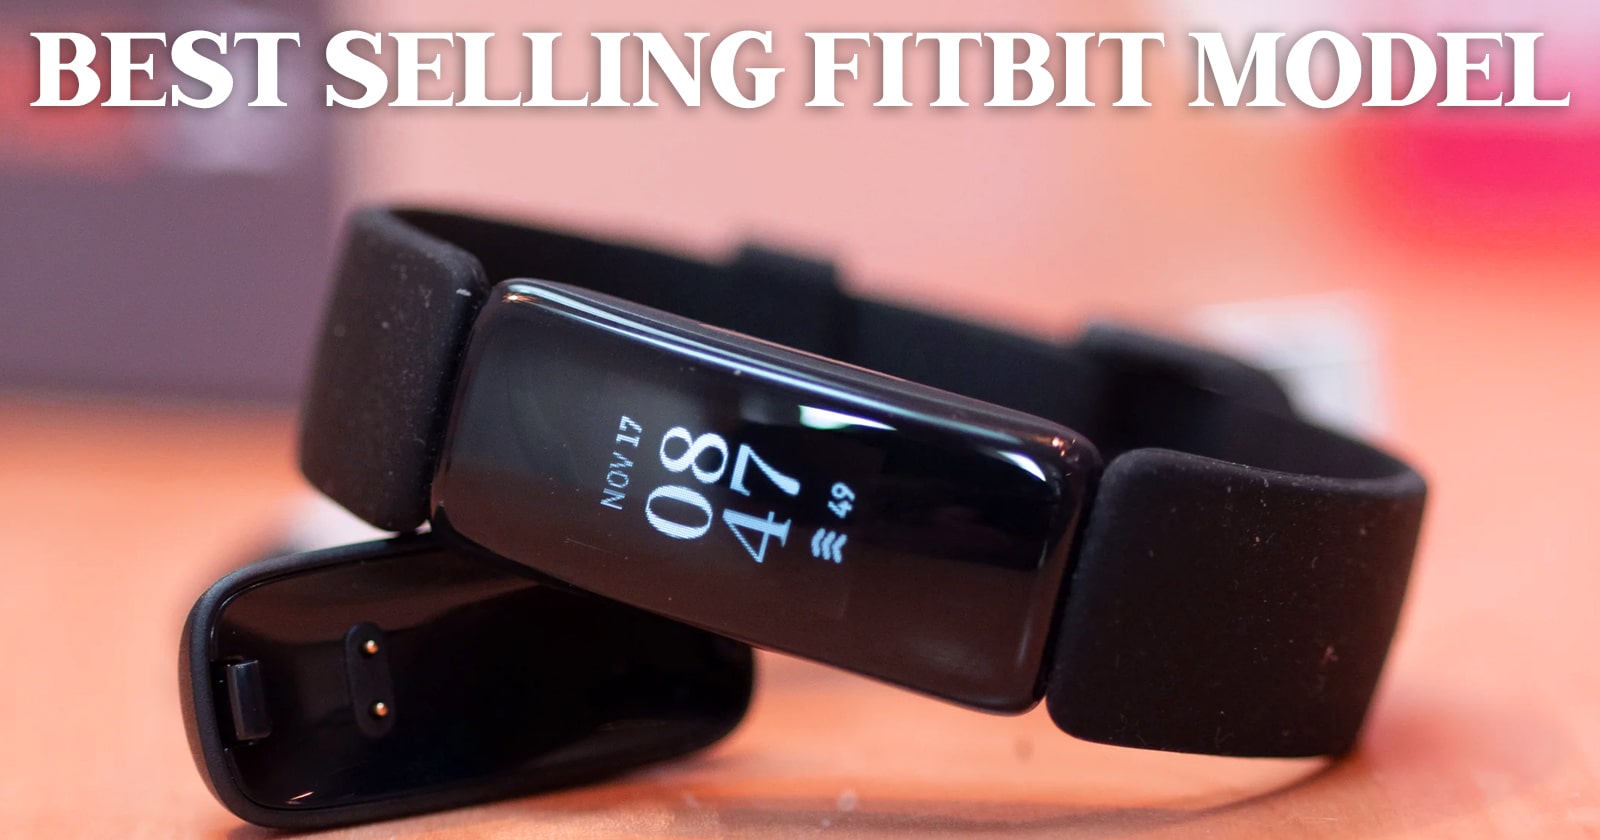 Best selling Fitbit model in the world